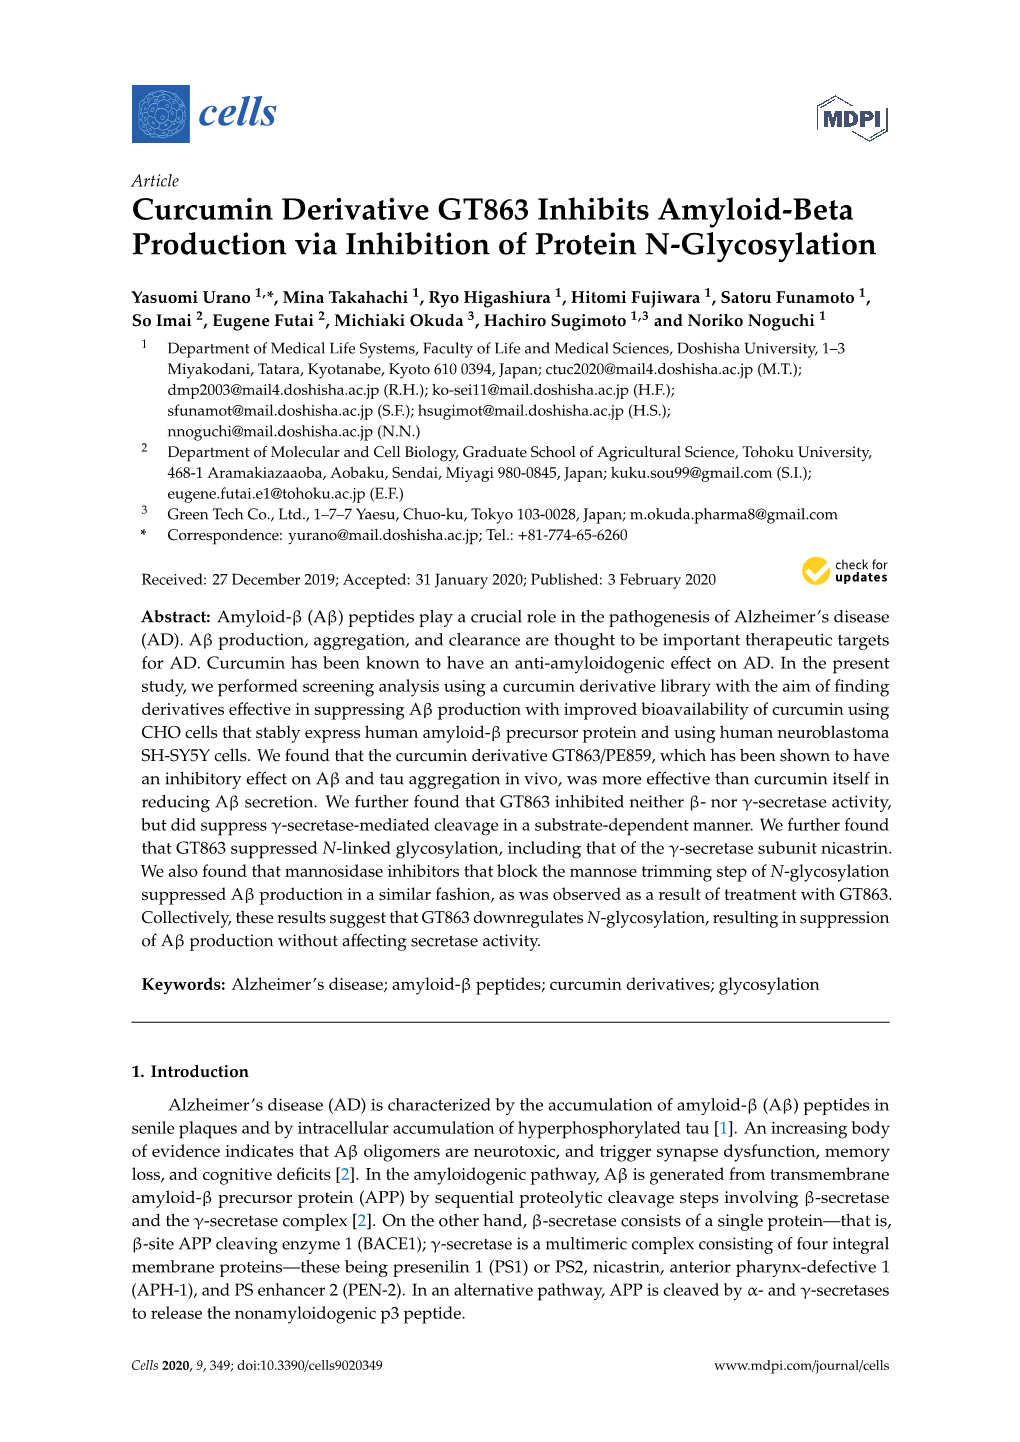 Curcumin Derivative GT863 Inhibits Amyloid-Beta Production Via Inhibition of Protein N-Glycosylation